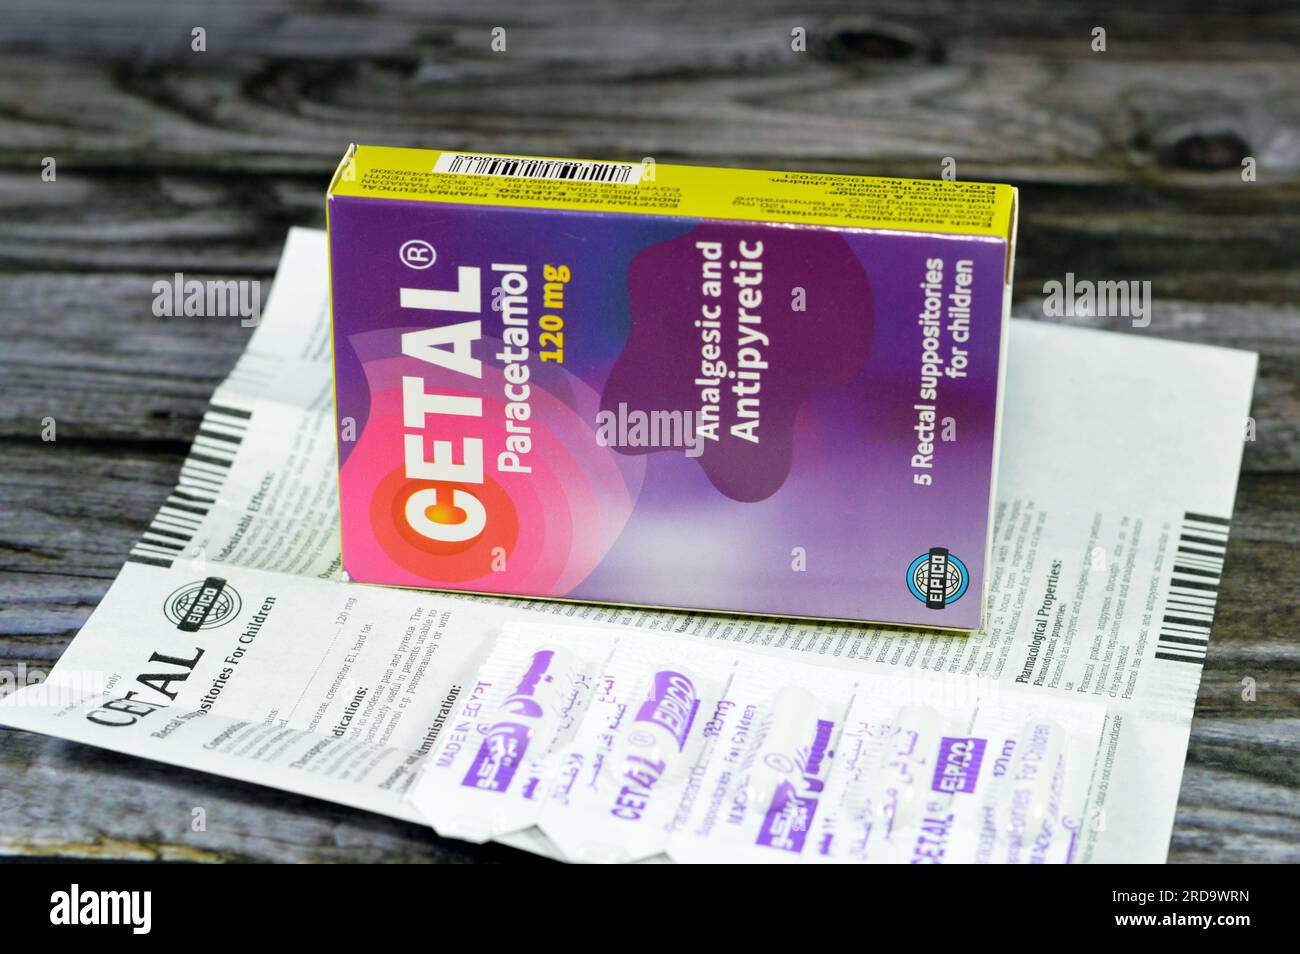 Cairo, Egypt, June 26 2023: CETAL (Paracetamol) 120 mg – 5 Suppositories For Children, Analgesic, Antipyretic, anti inflammatory by EGYPTIAN INT. PHAR Stock Photo